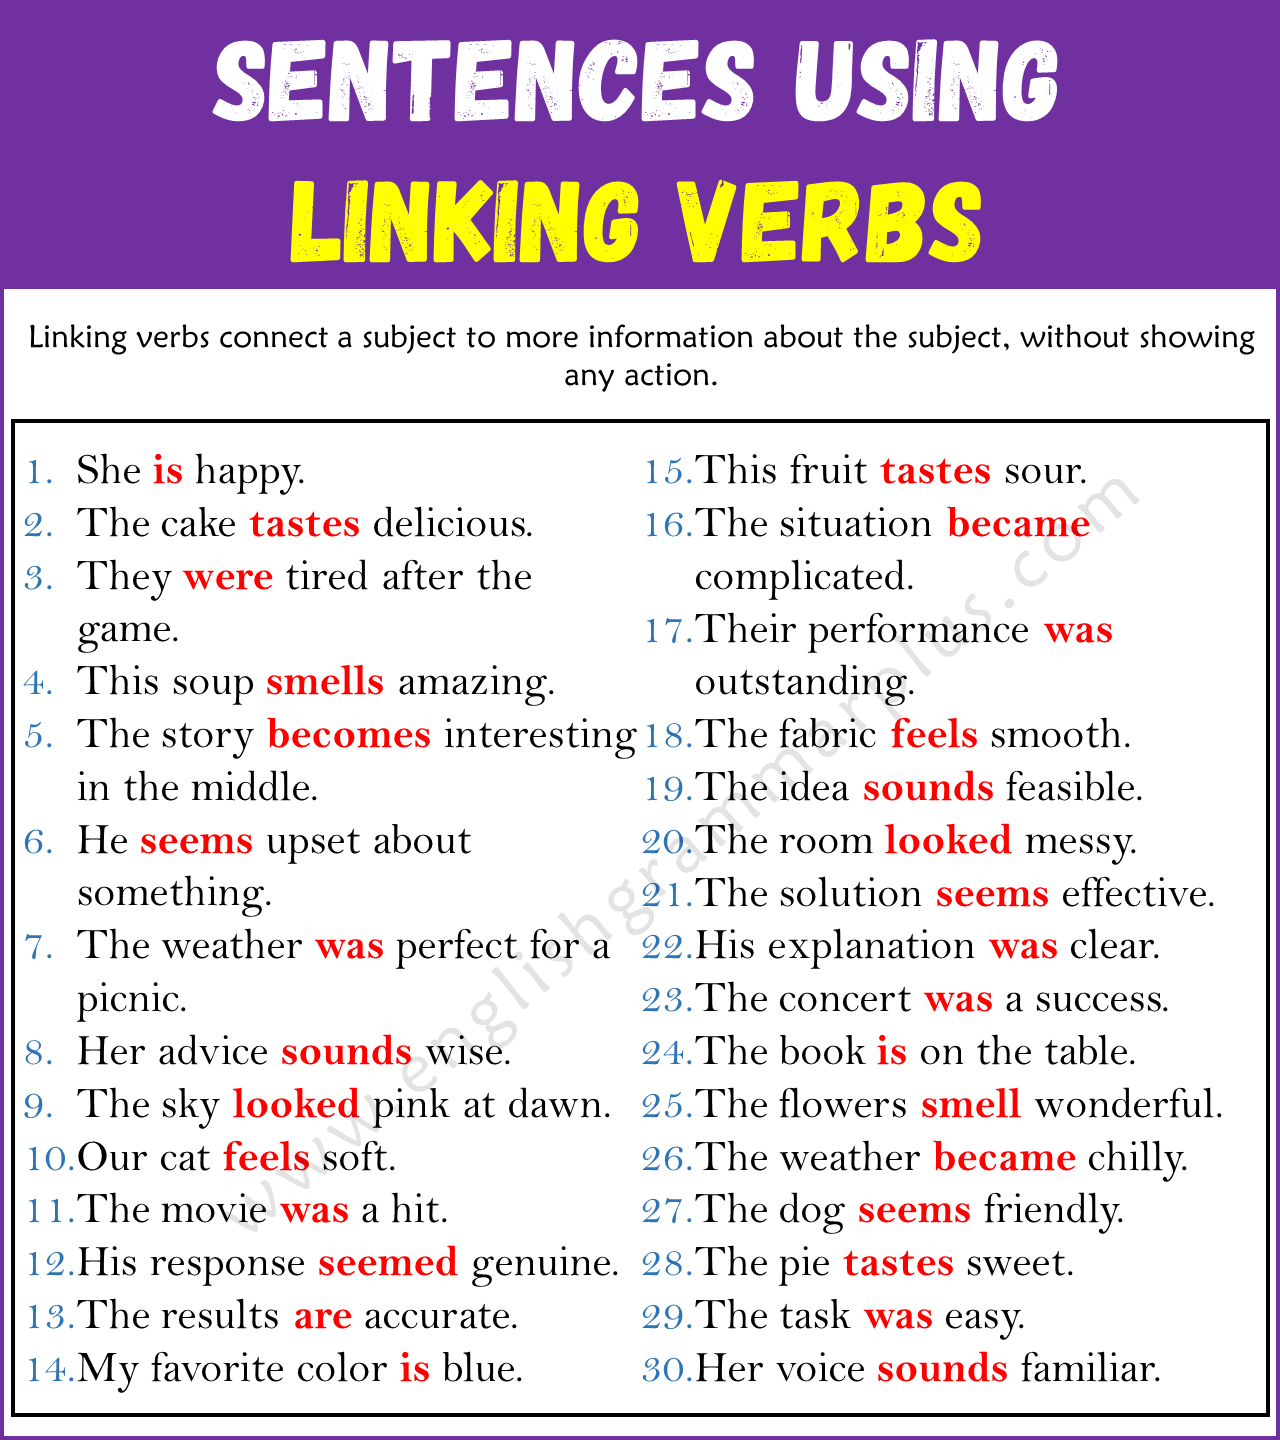 Example Sentences Using Linking Verbs